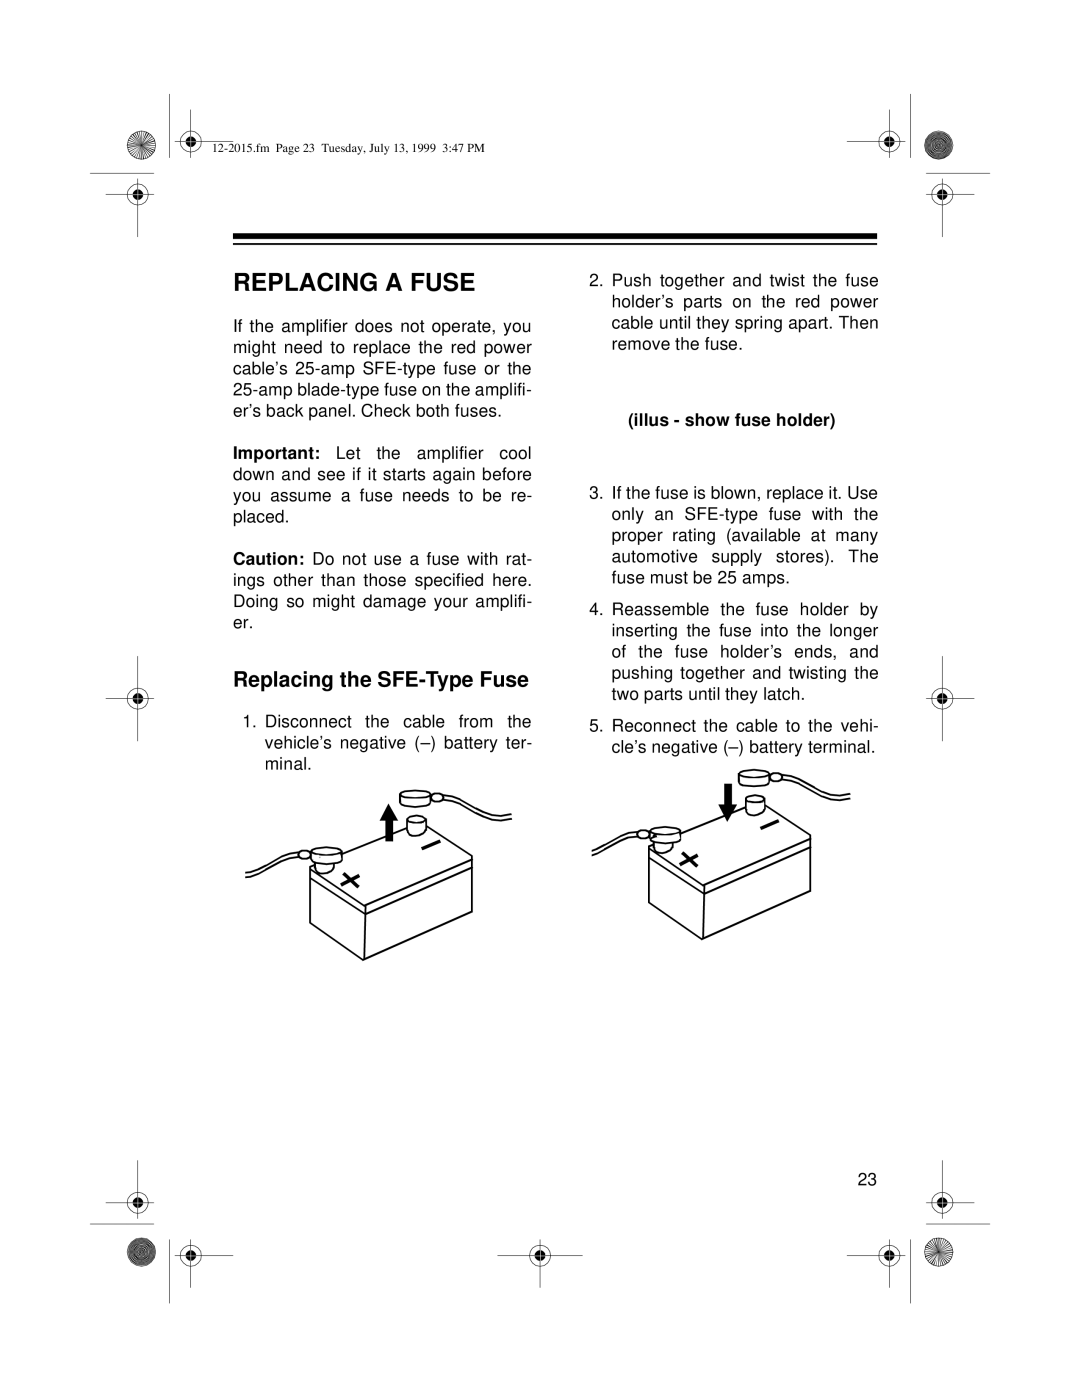 Radio Shack XL-150 owner manual Replacing A Fuse, Replacing the SFE-TypeFuse 